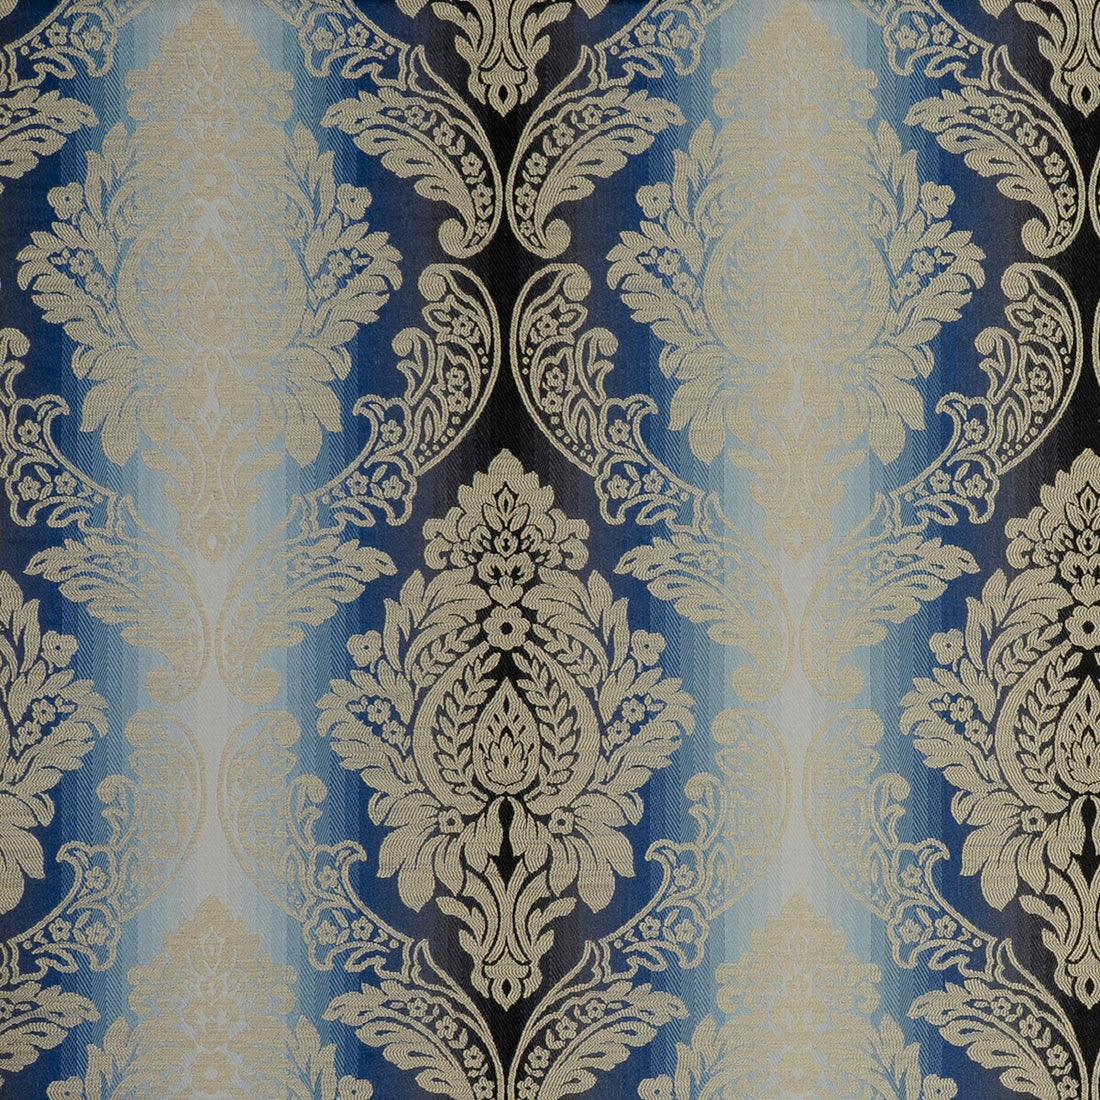 Ornato fabric in aqua color - pattern F0792/01.CAC.0 - by Clarke And Clarke in the Clarke &amp; Clarke Palladio collection